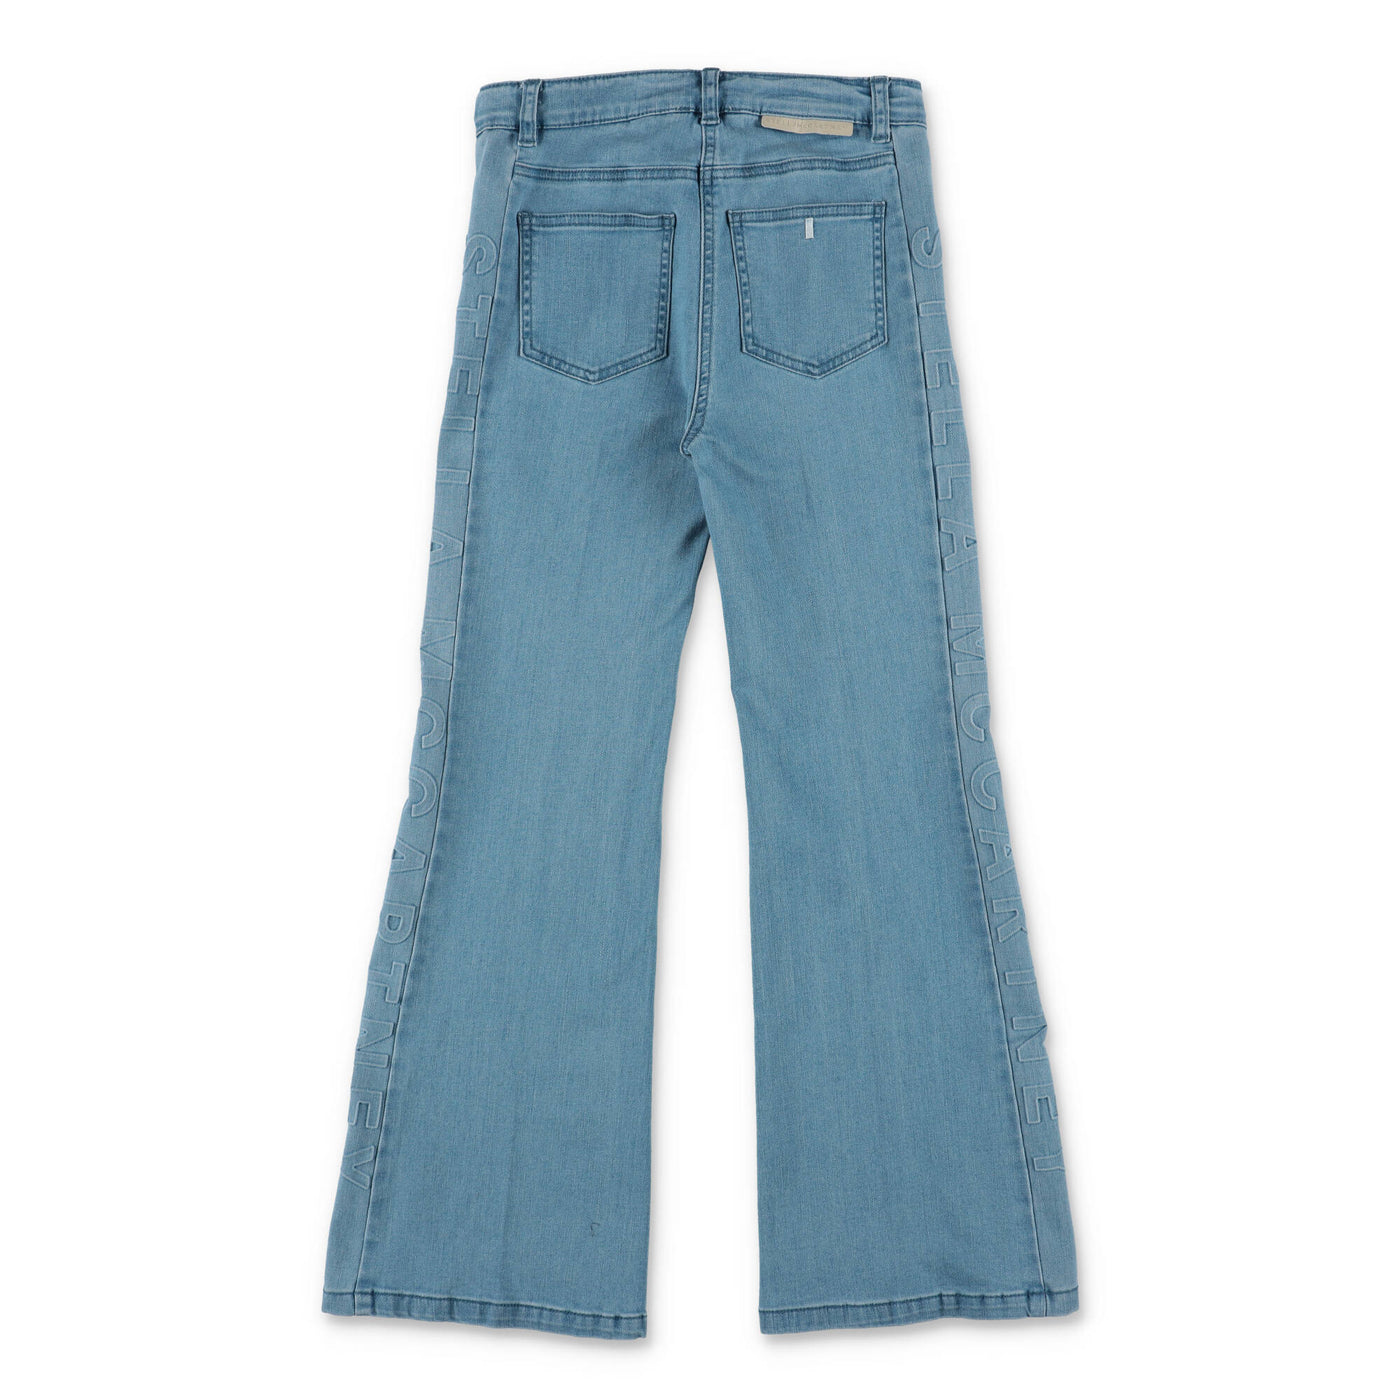 Light blue stretch denim cotton girl STELLA McCARTNEY jeans